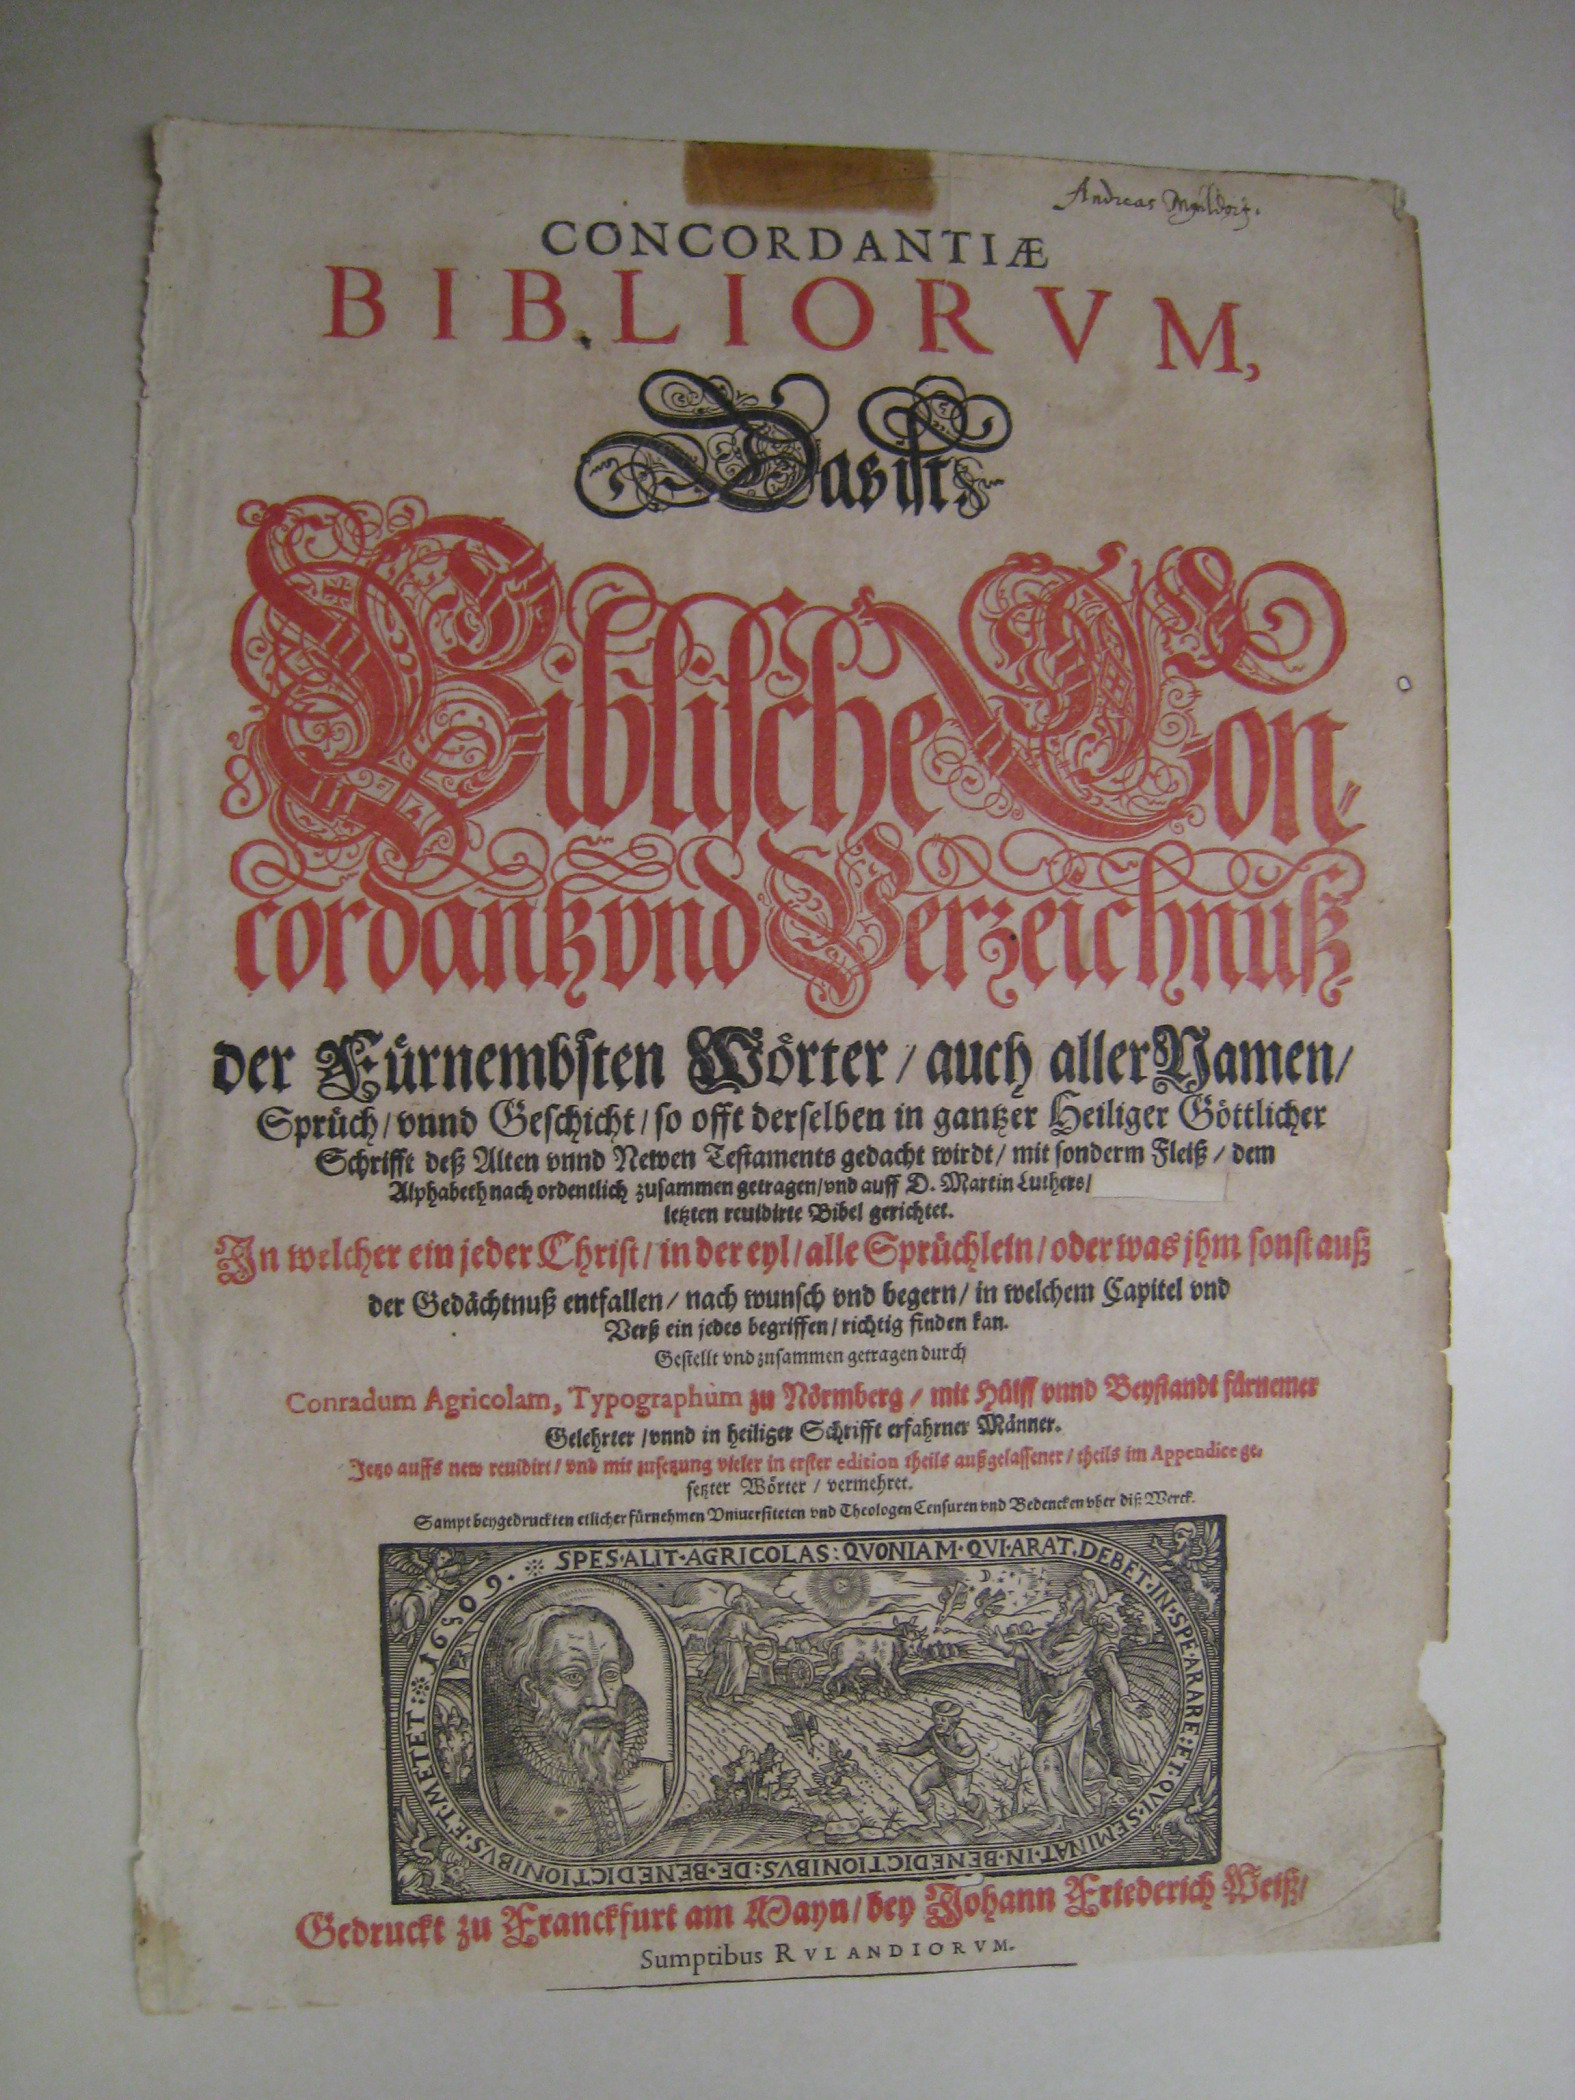 Title Page to Concordantiae Bibliorum, printed 1922